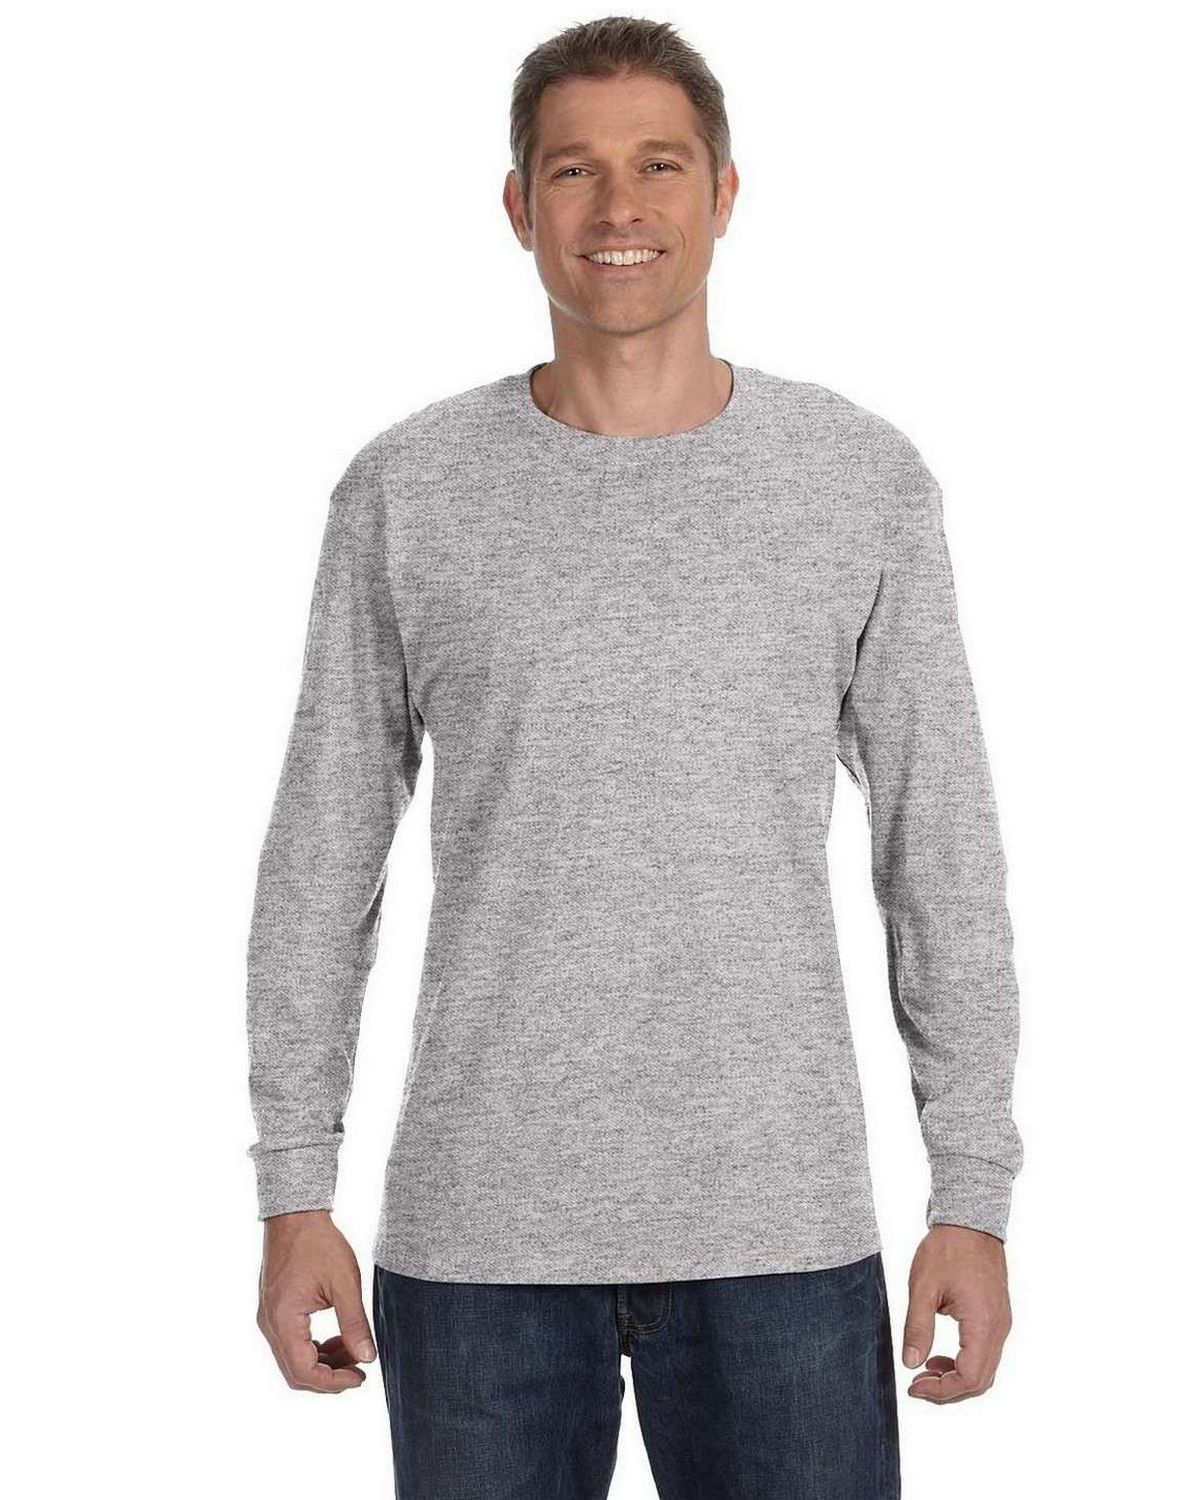 Hanes 5586 Tagless Long Sleeve T Shirt - Shop at ApparelnBags.com